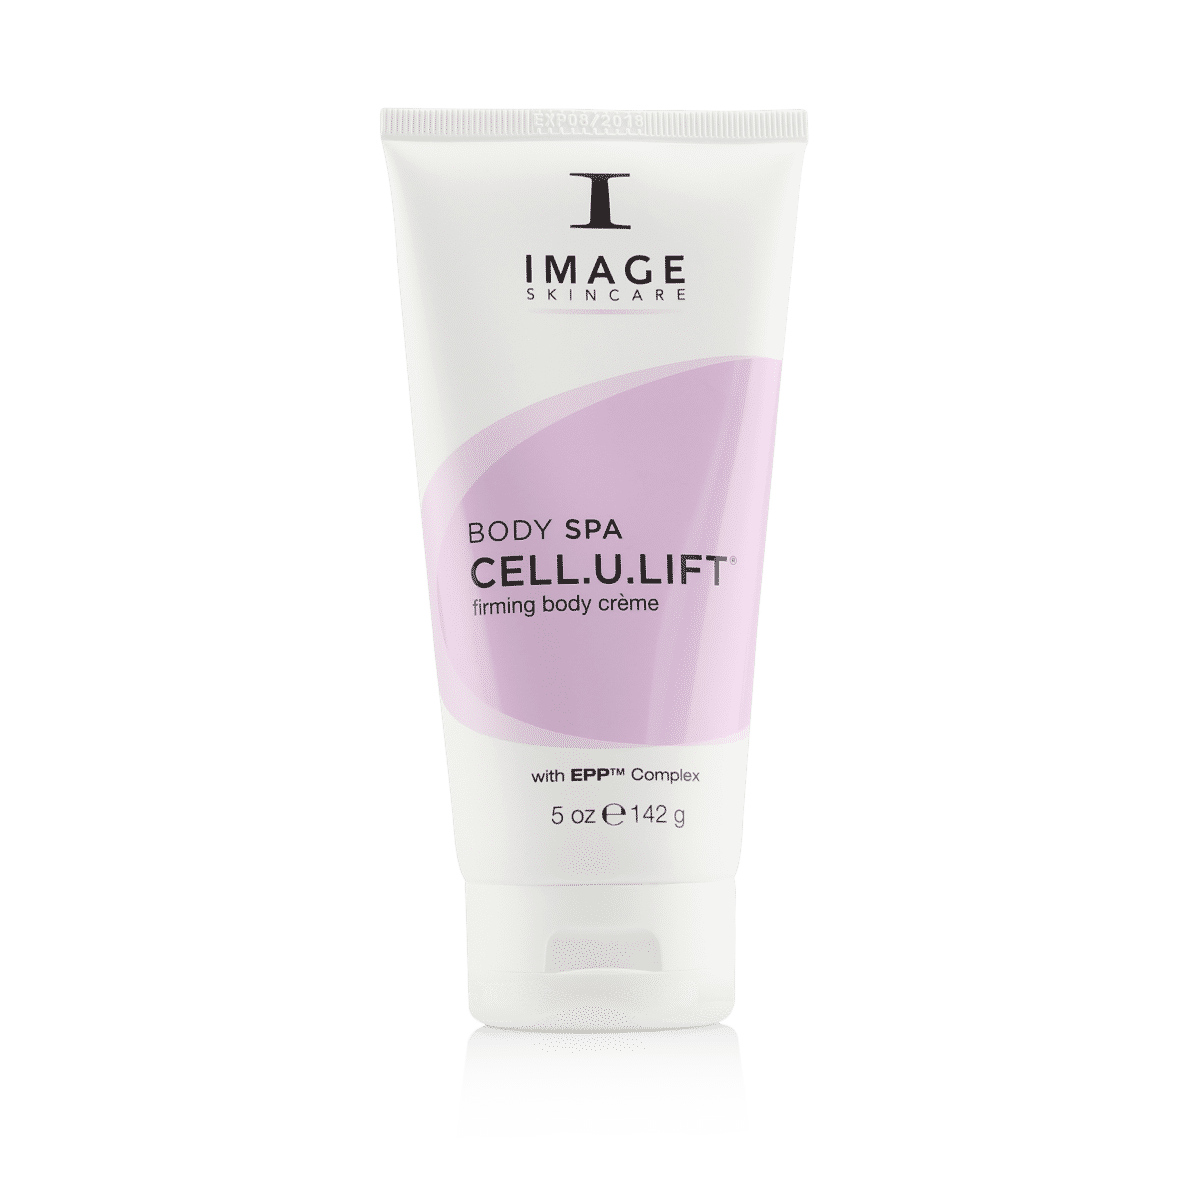 Image Skincare SPA CELL.U.LIFT body creme